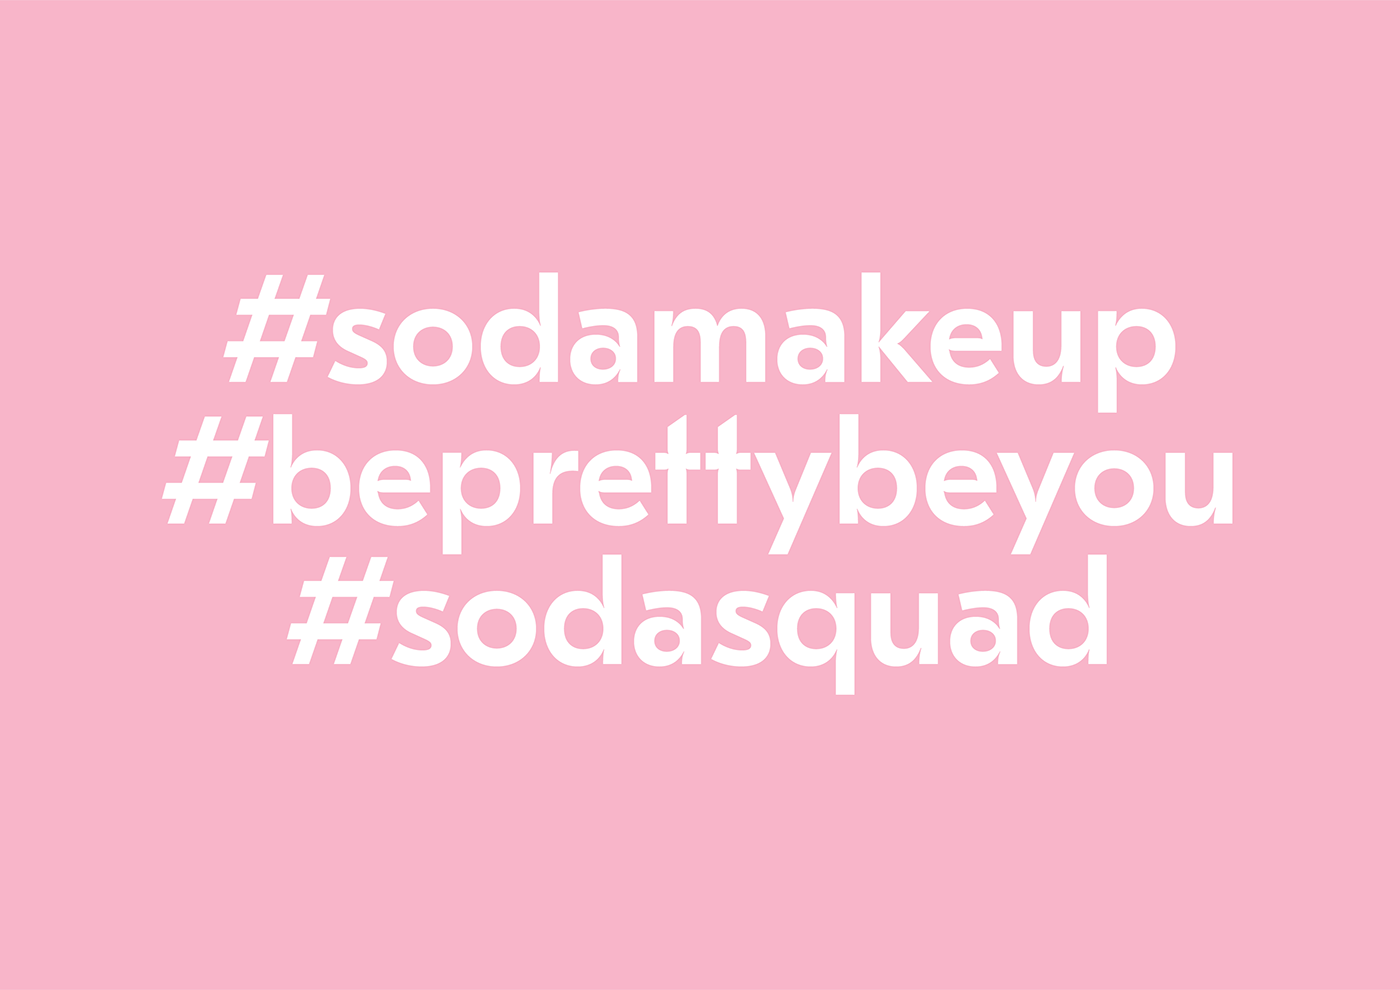 makeup soda branding  pink generationz softrevolution stickers looks unicorn mermaids